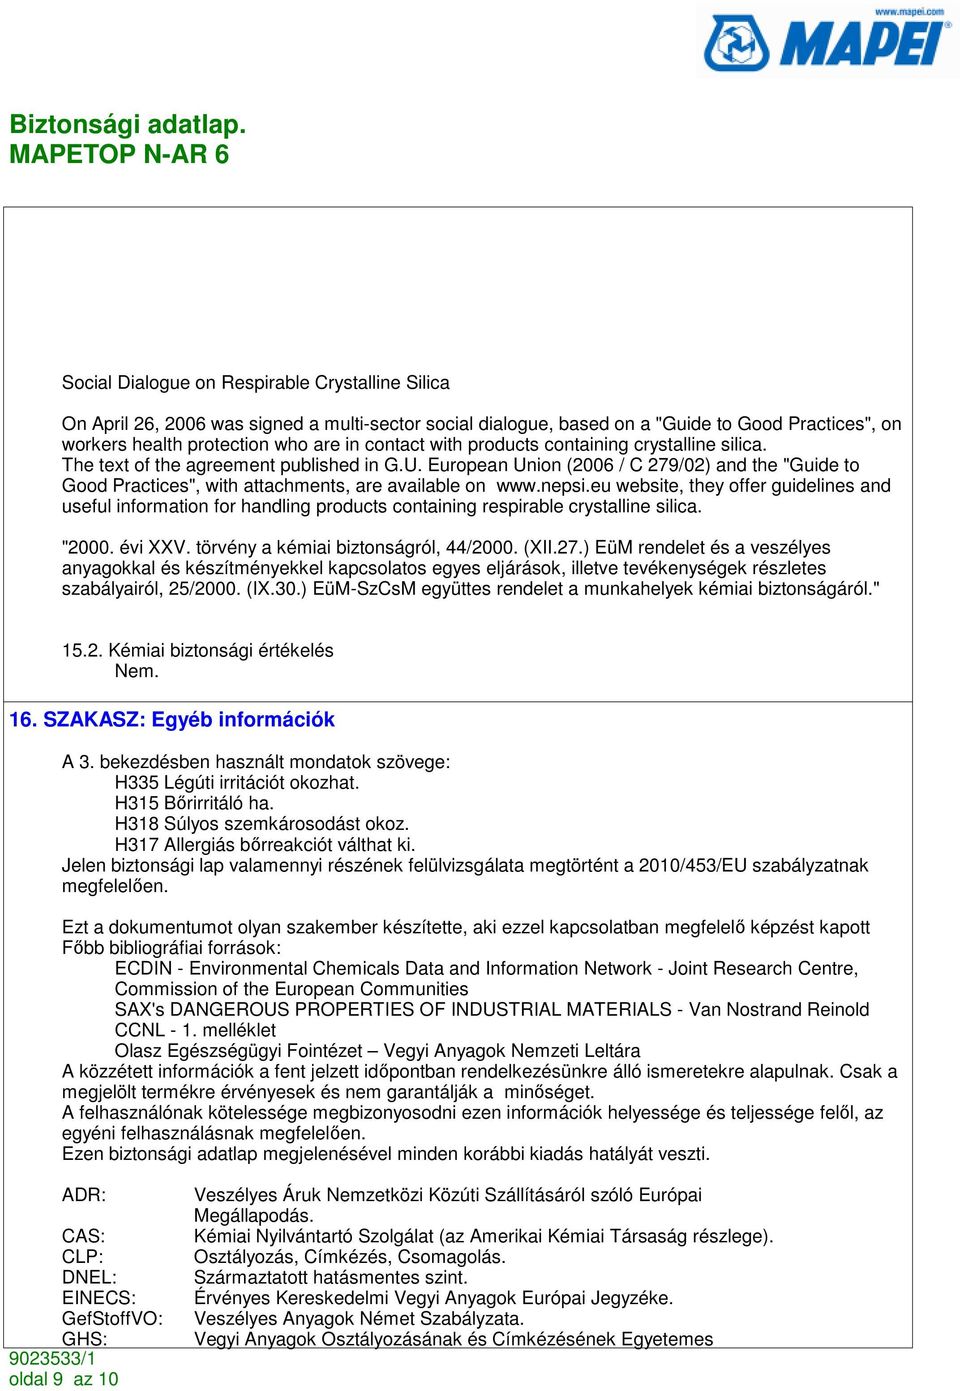 nepsi.eu website, they offer guidelines and useful information for handling products containing respirable crystalline silica. "2000. évi XXV. törvény a kémiai biztonságról, 44/2000. (XII.27.